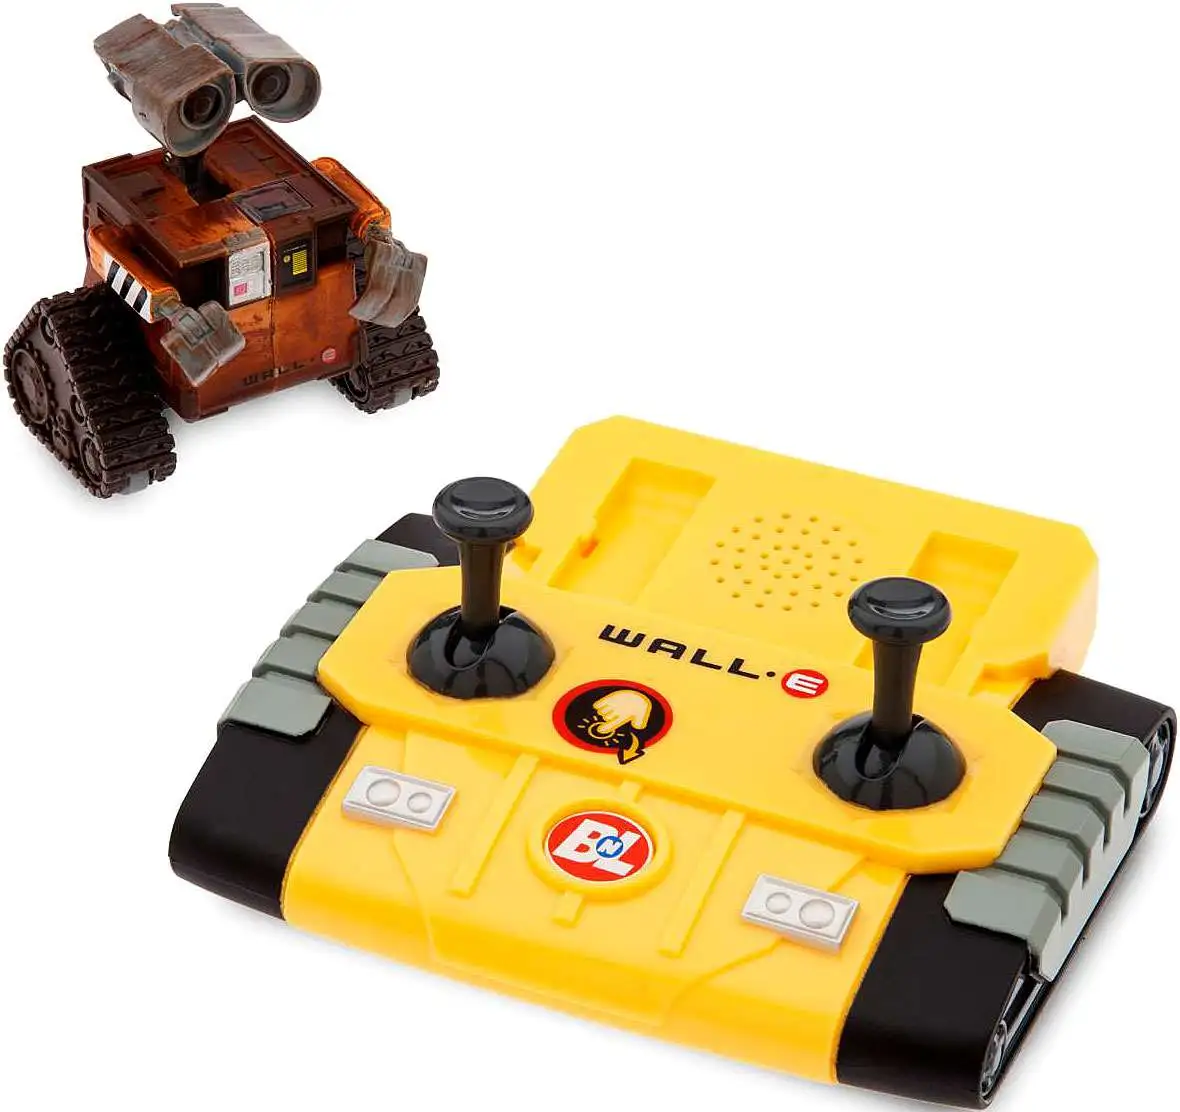 Mattel Disney Pixar WALL-E Robot Toy, Remote Control Hello WALL-E Robot  Figure, For Kids